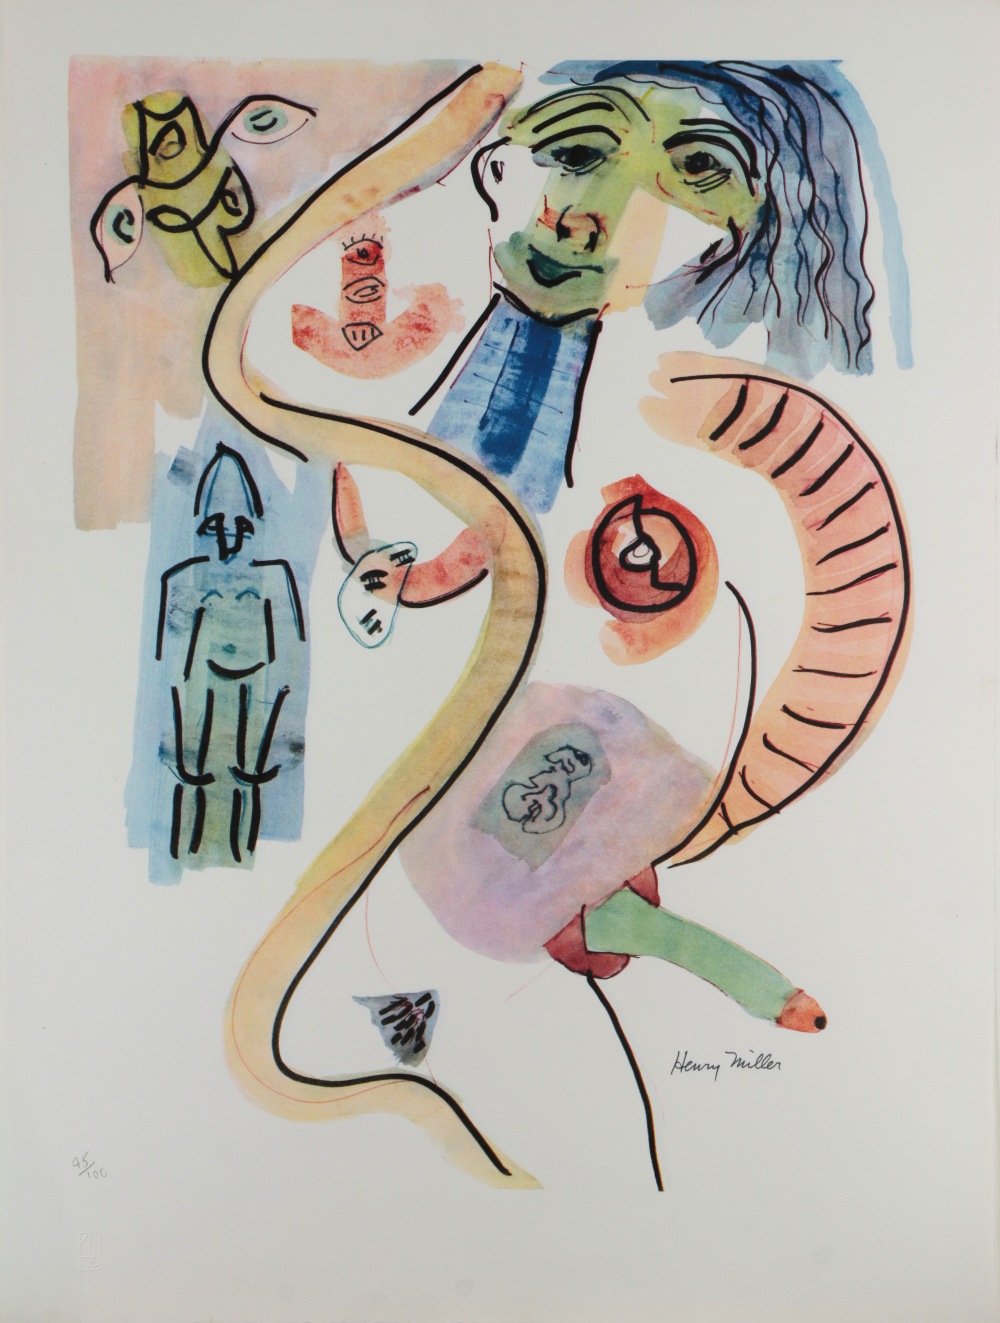 (Lot of 4) Henry Miller (American, 1891-1980), "Asamara (Morning Erection)," color offset prints,